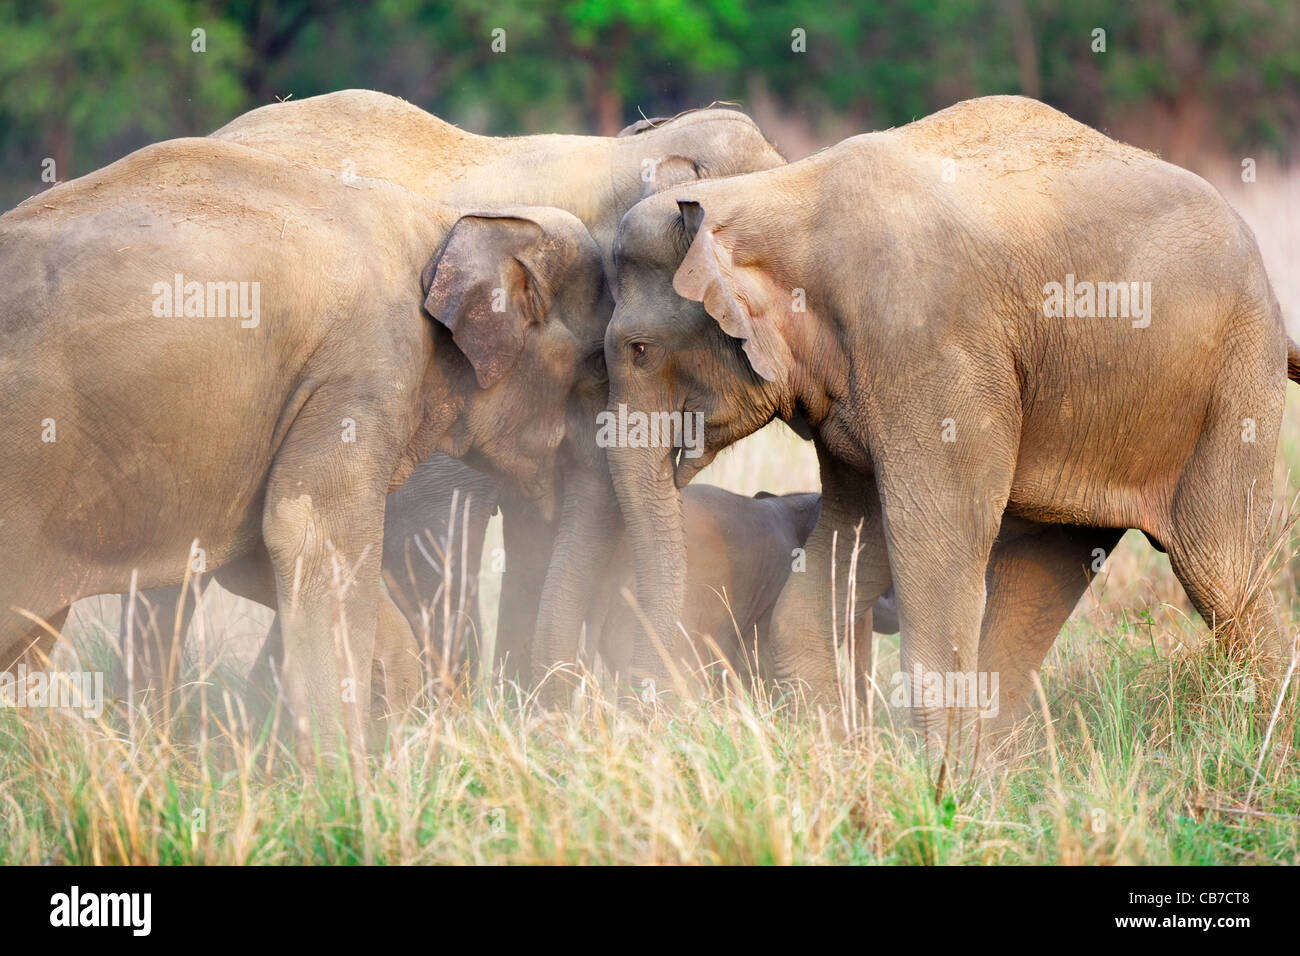 Elephants at Dhikala in Jim Corbett Tiger Reserve, India. Stock Photo